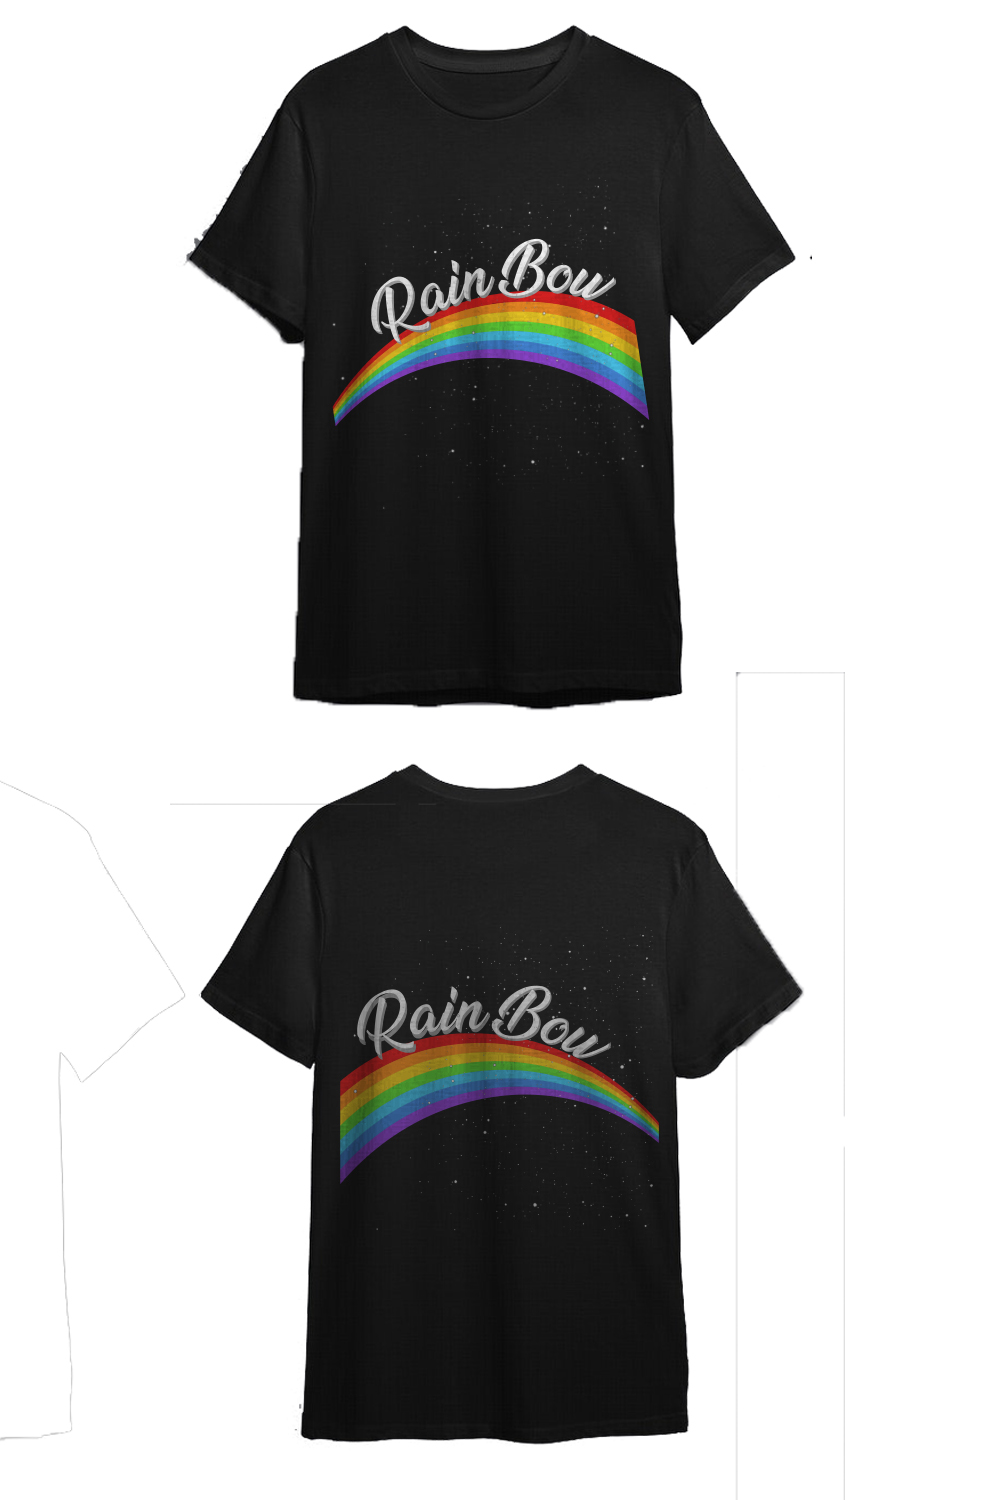 T-shirt Rainbow Graphics Design pinterest image.